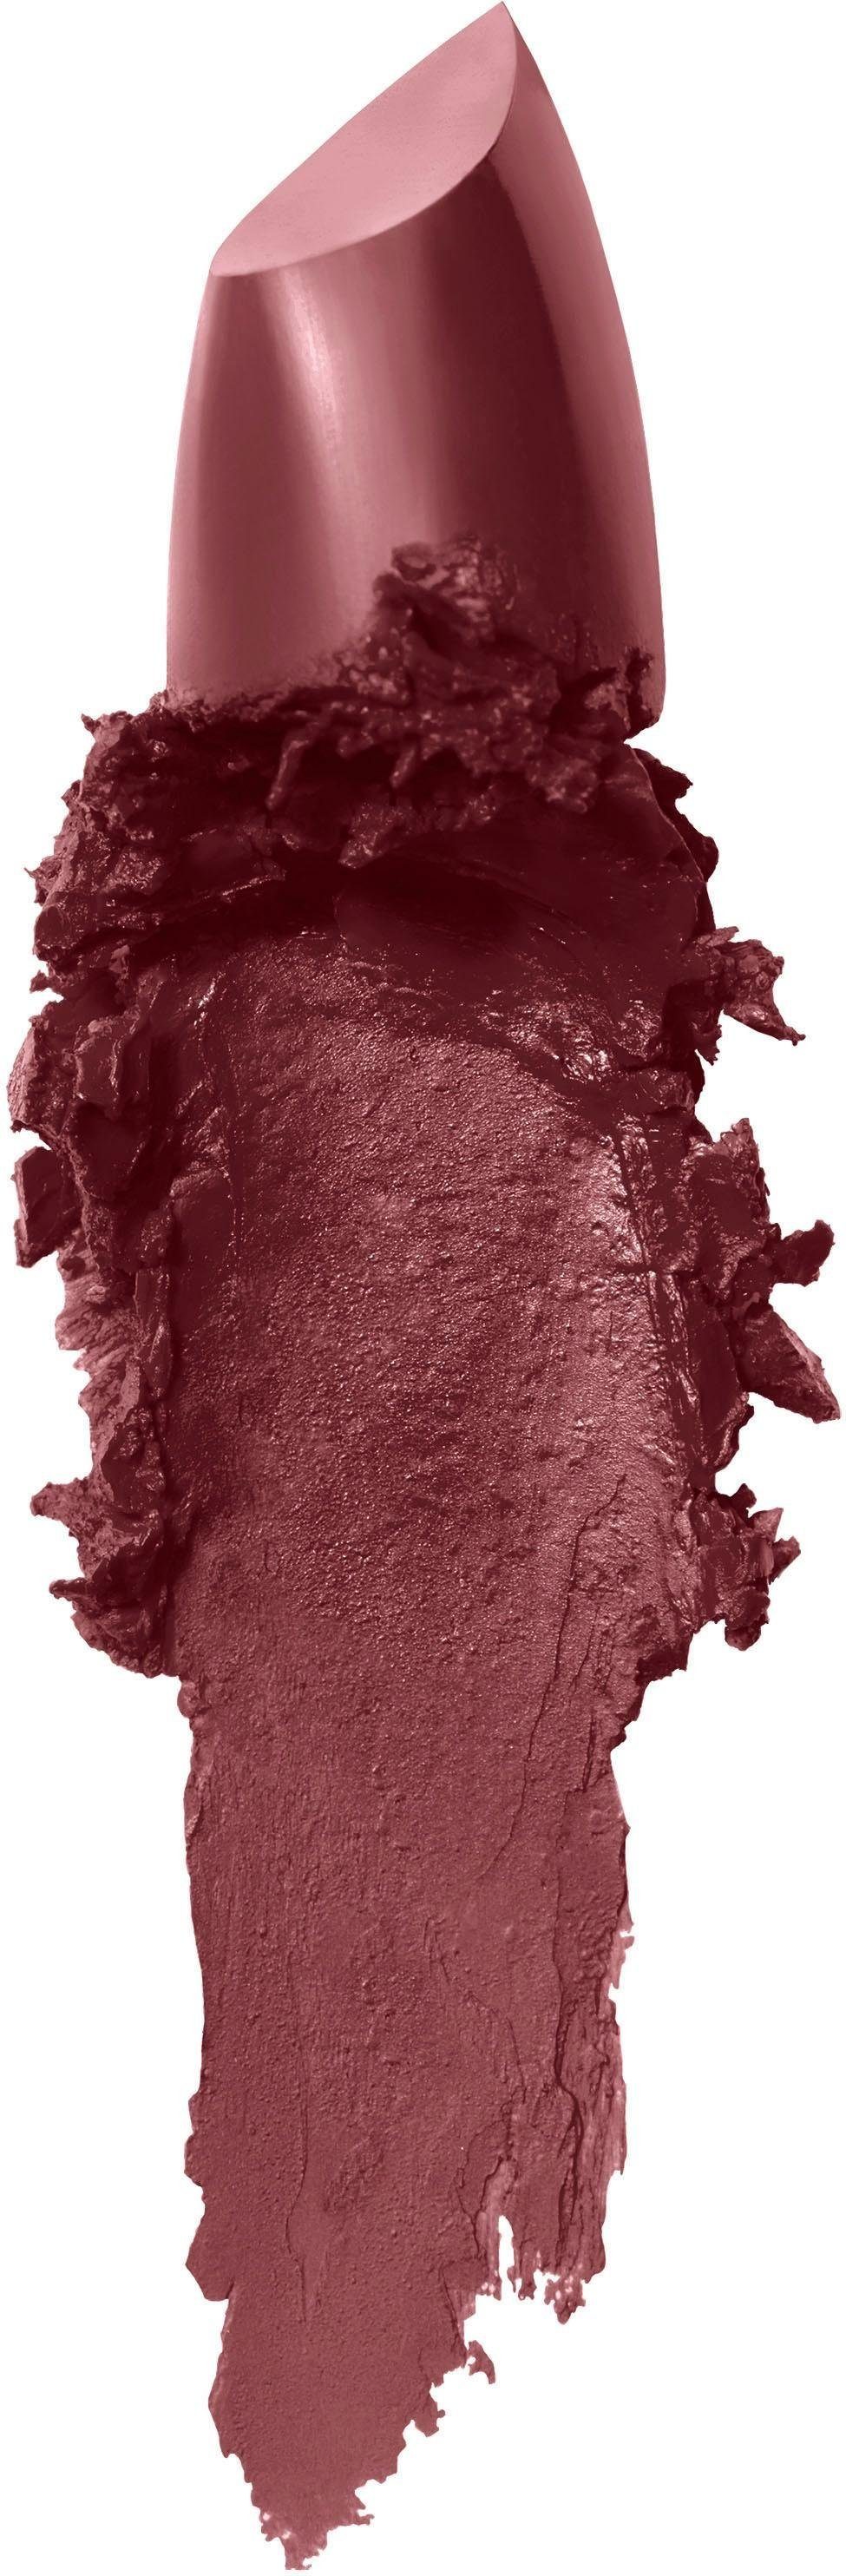 YORK the Color Sensational NEW 211 Rosey MAYBELLINE Risk Lippenstift Creams